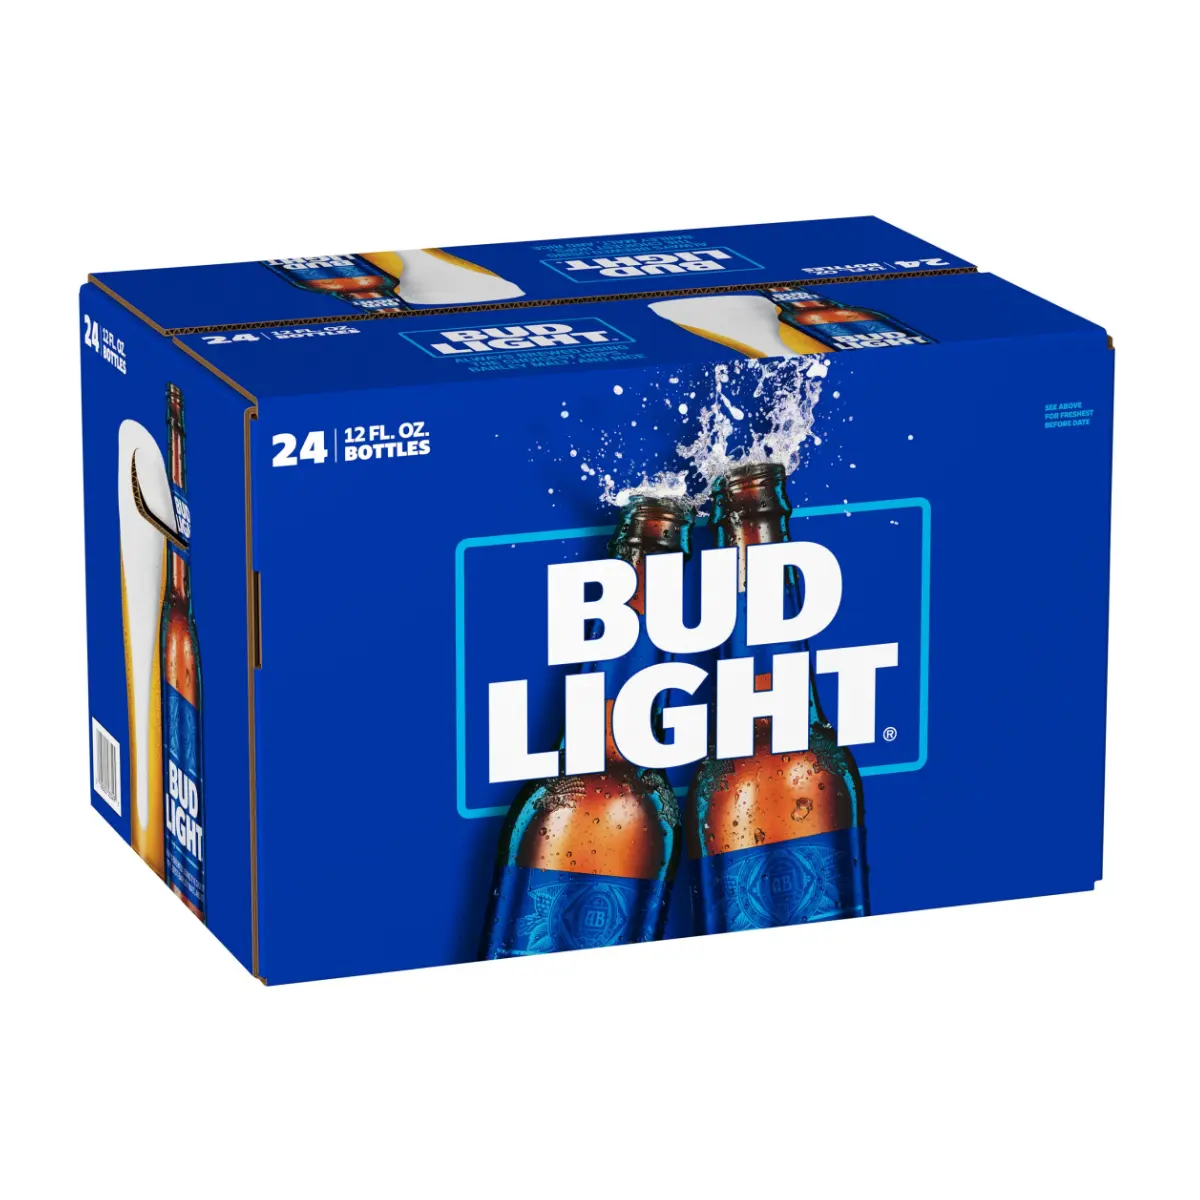 Бутон светлого пива 30 упаковок пива 12 FLOZ банки 4,2%